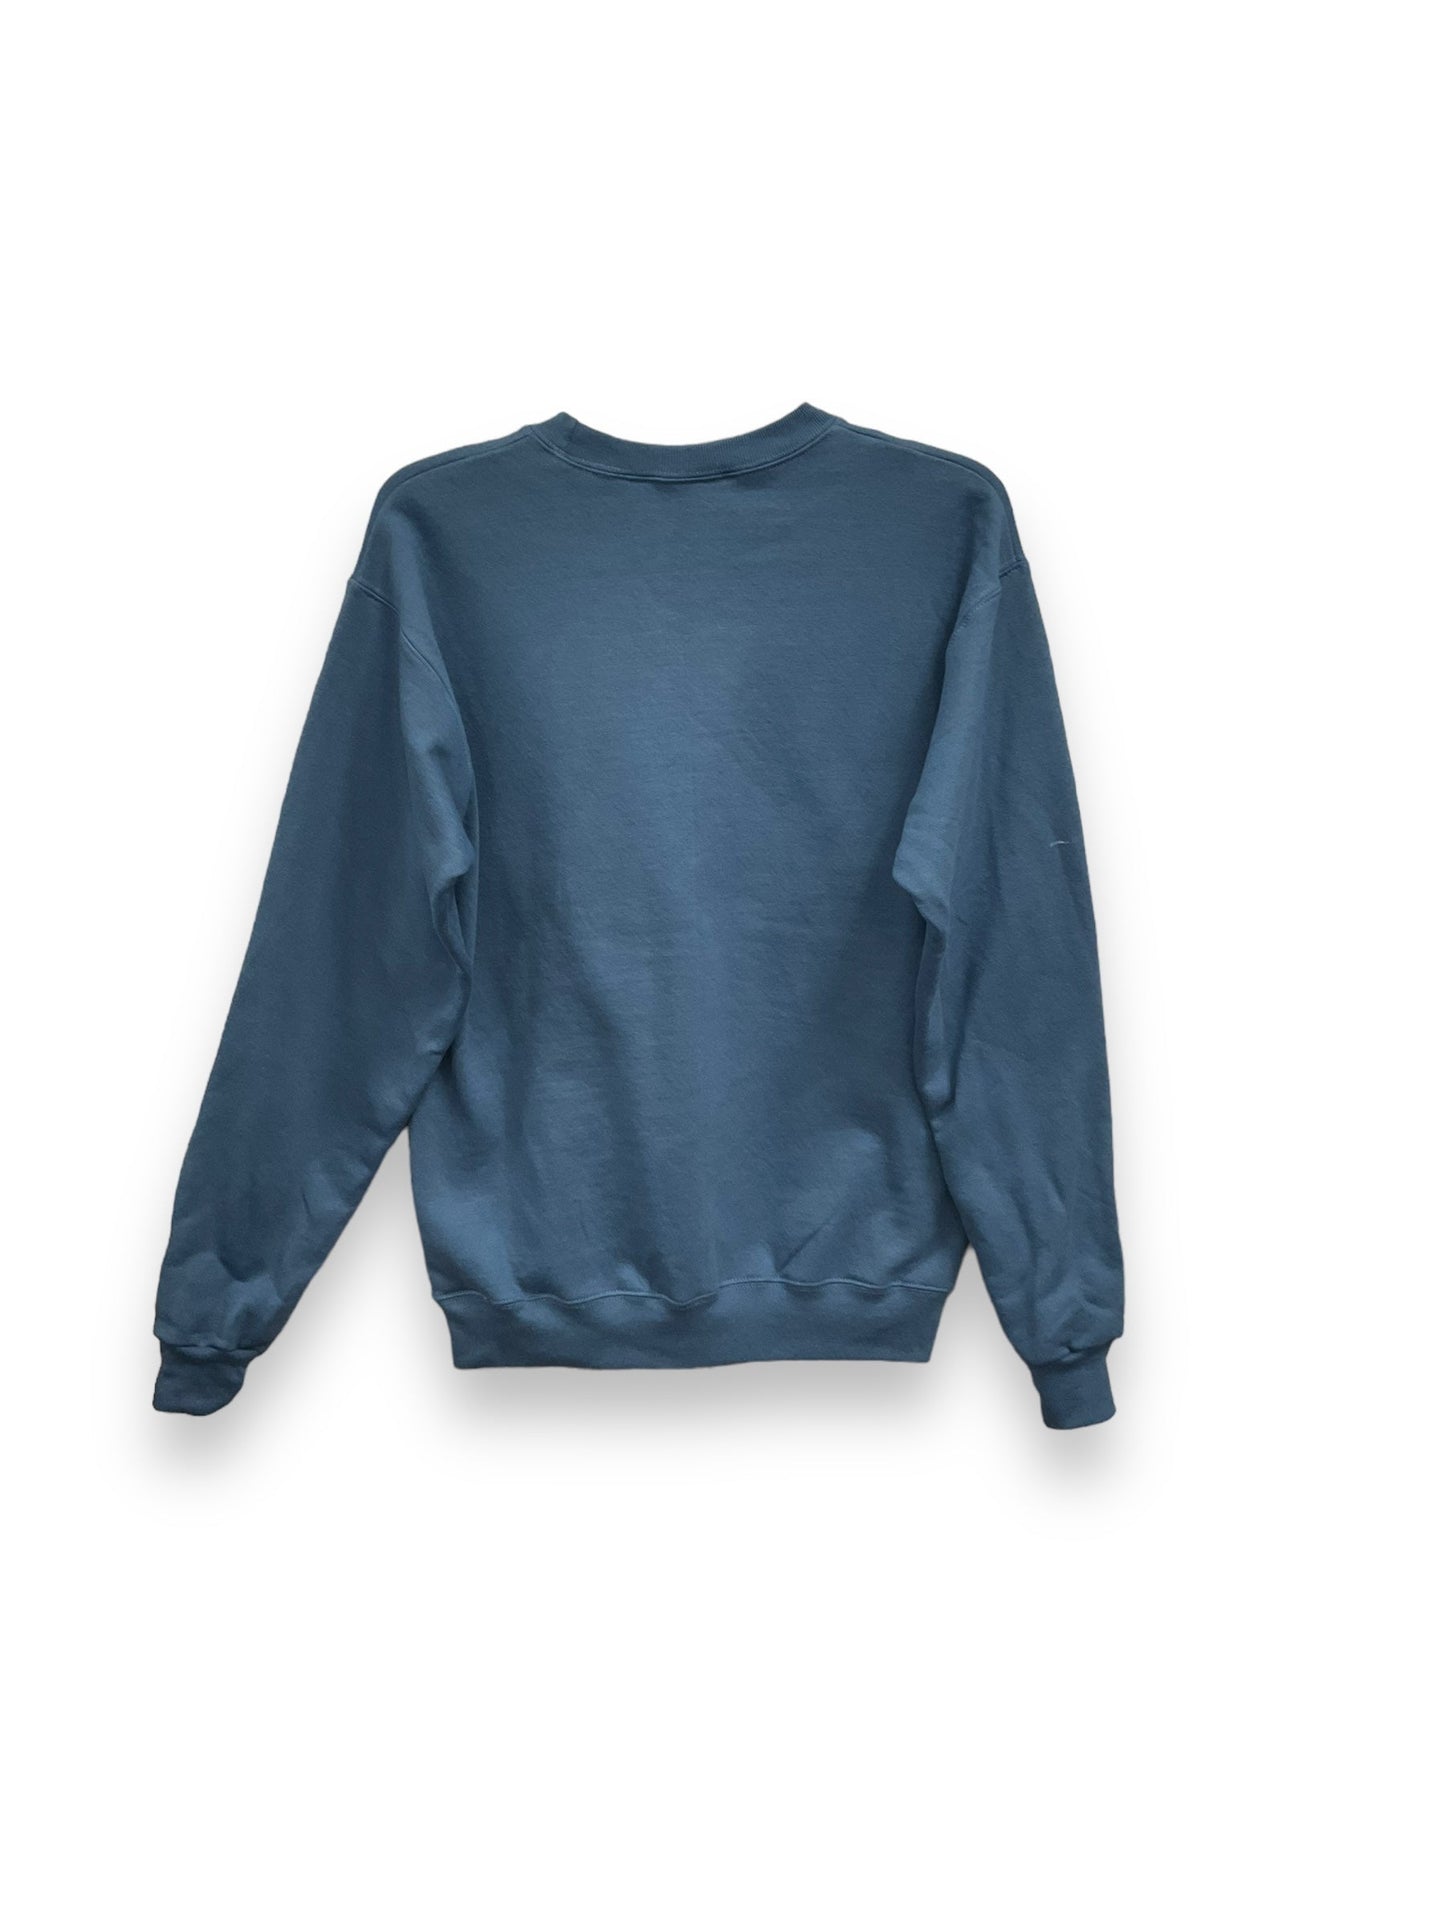 Sweatshirt Crewneck By Hanes  Size: Petite   S